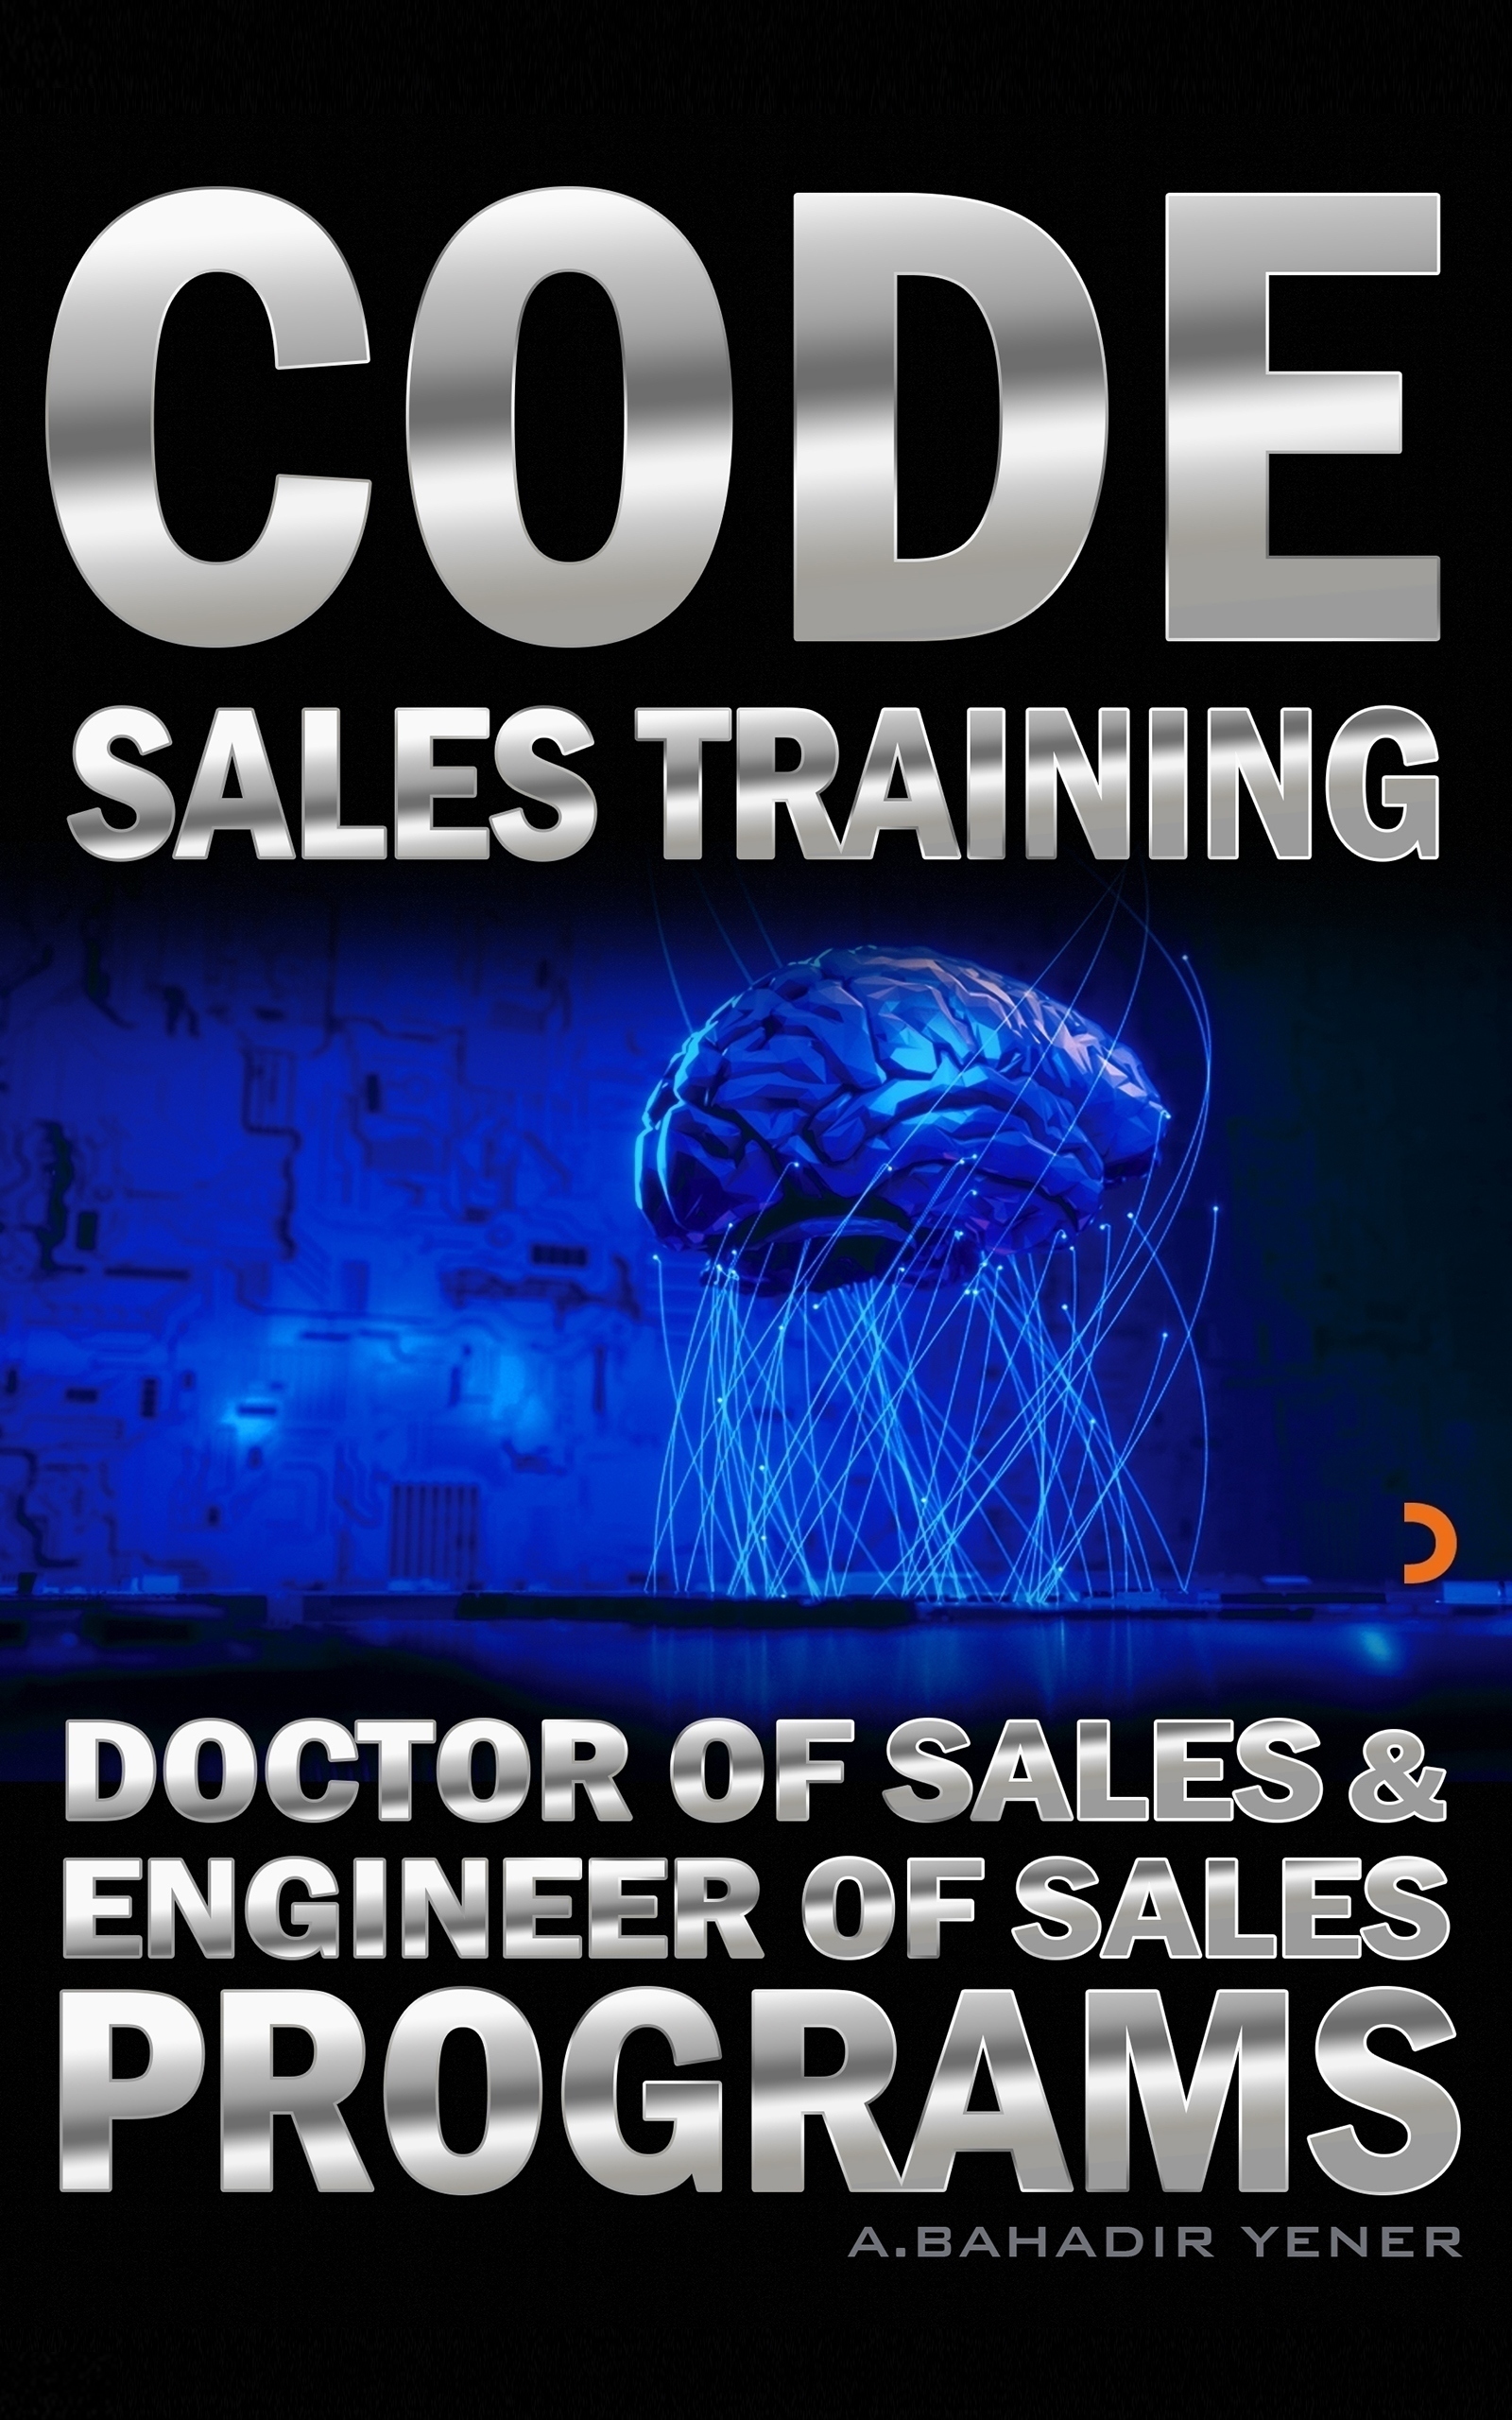 CODE Sales Training